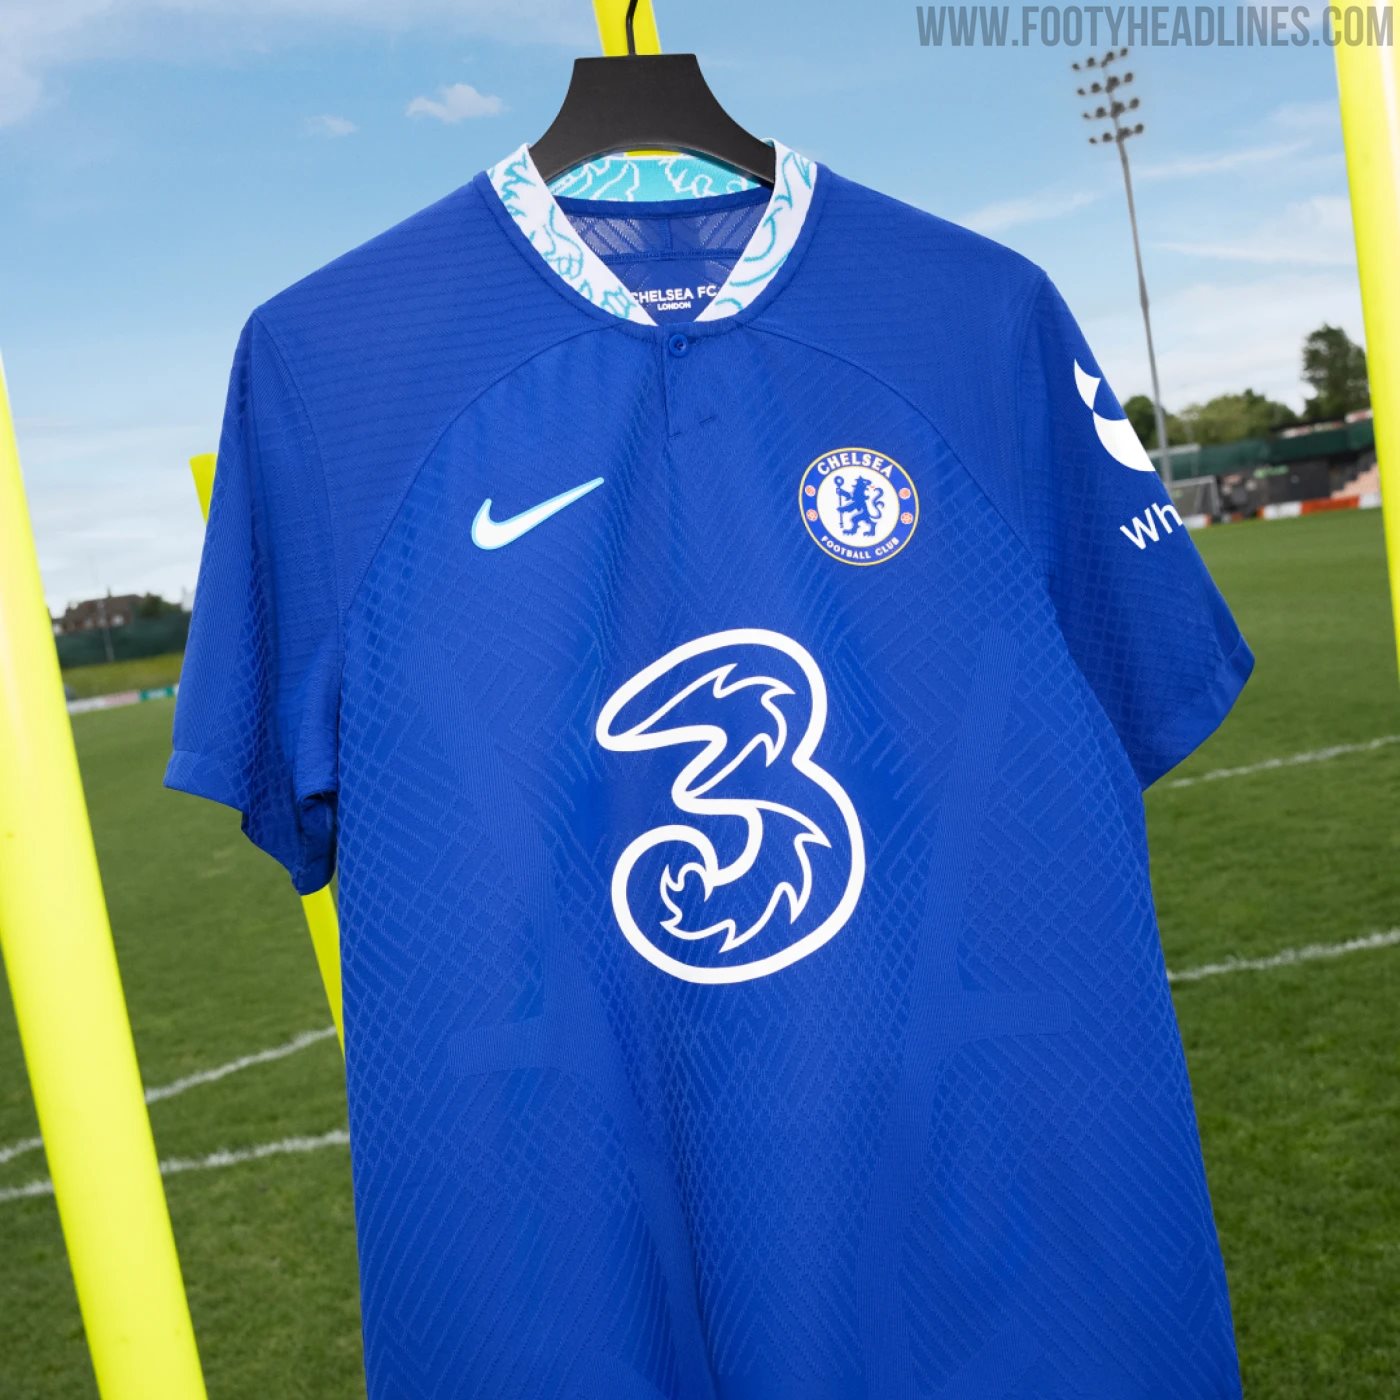 Koopje Peuter Torrent Chelsea 22-23 Home Kit Released - Footy Headlines